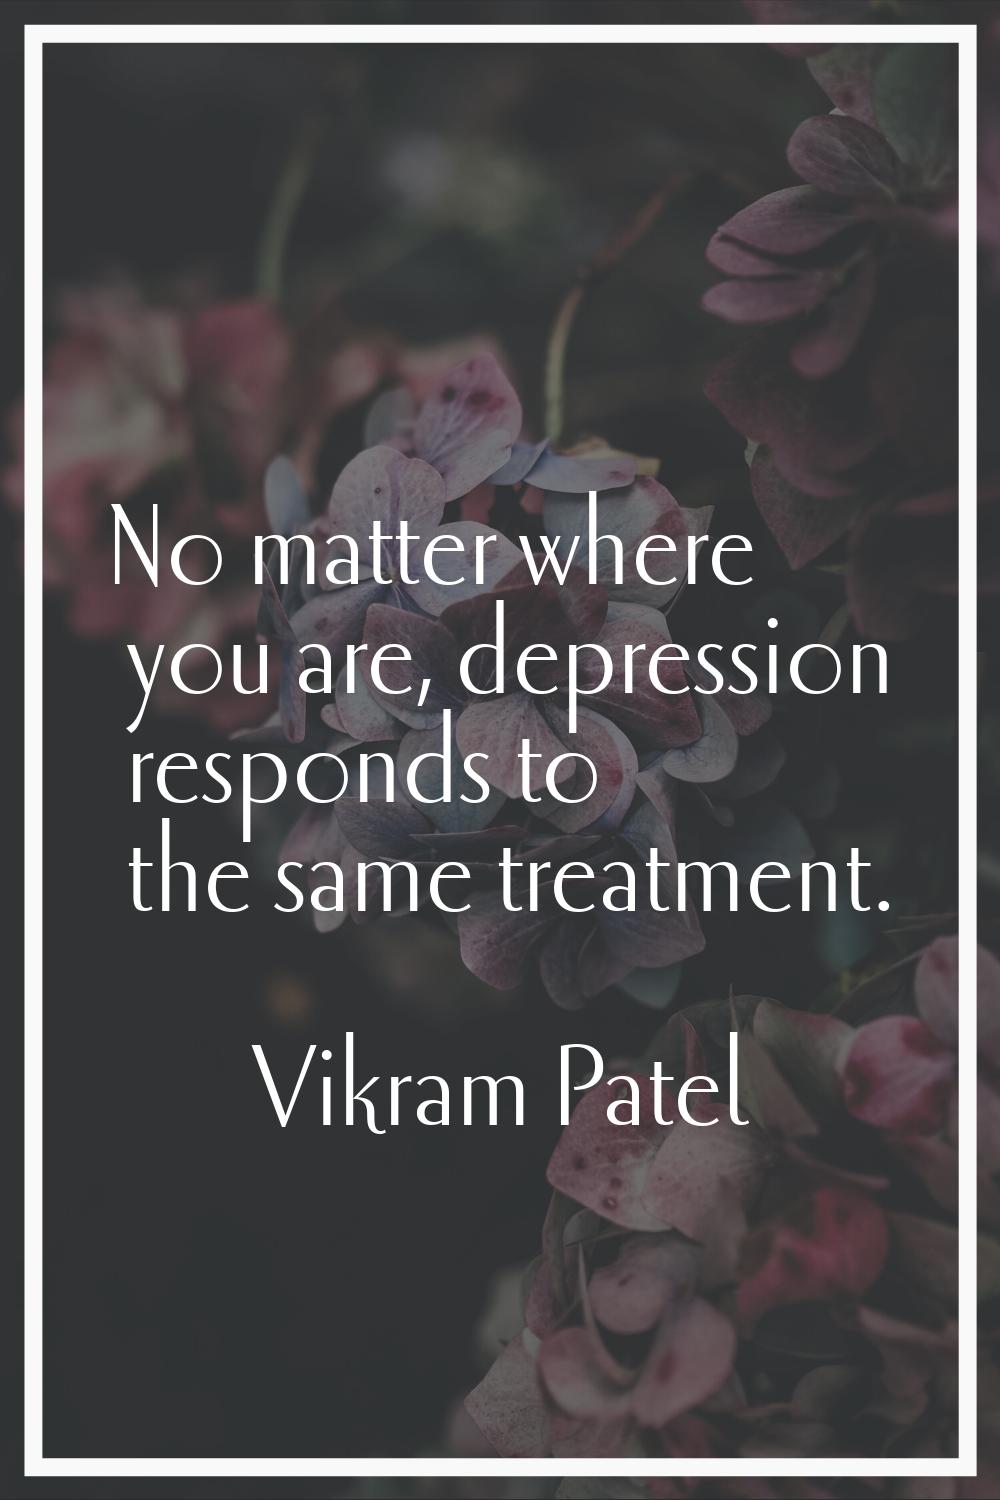 No matter where you are, depression responds to the same treatment.